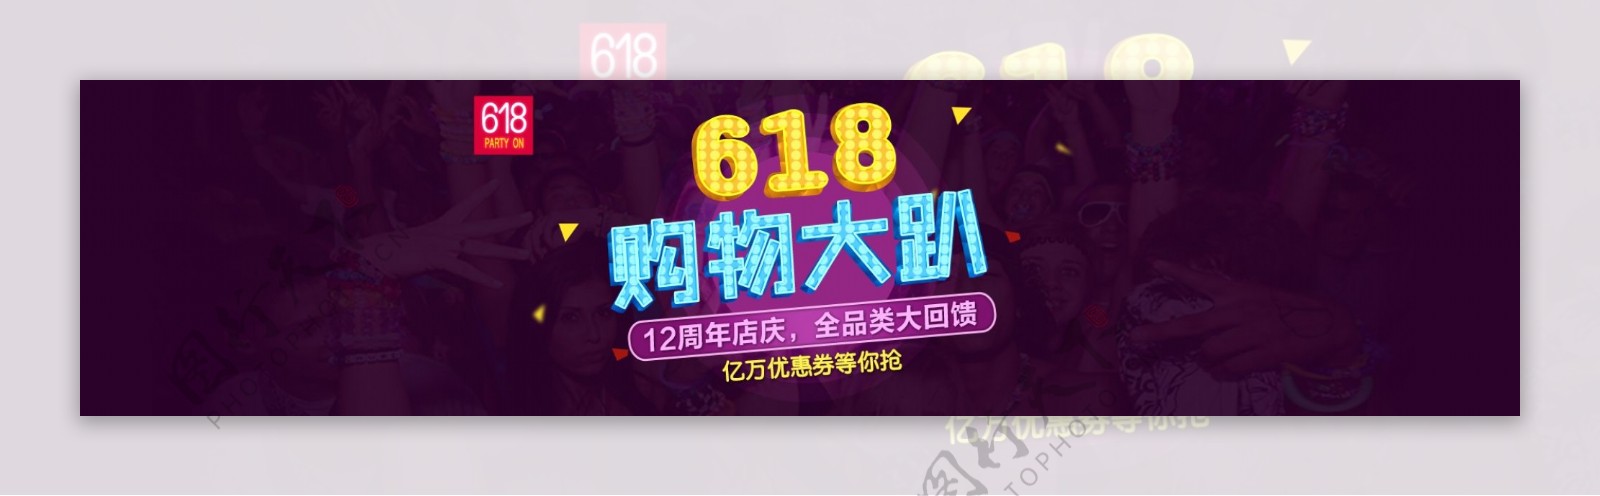 京东618购物宣传嘉年华banner